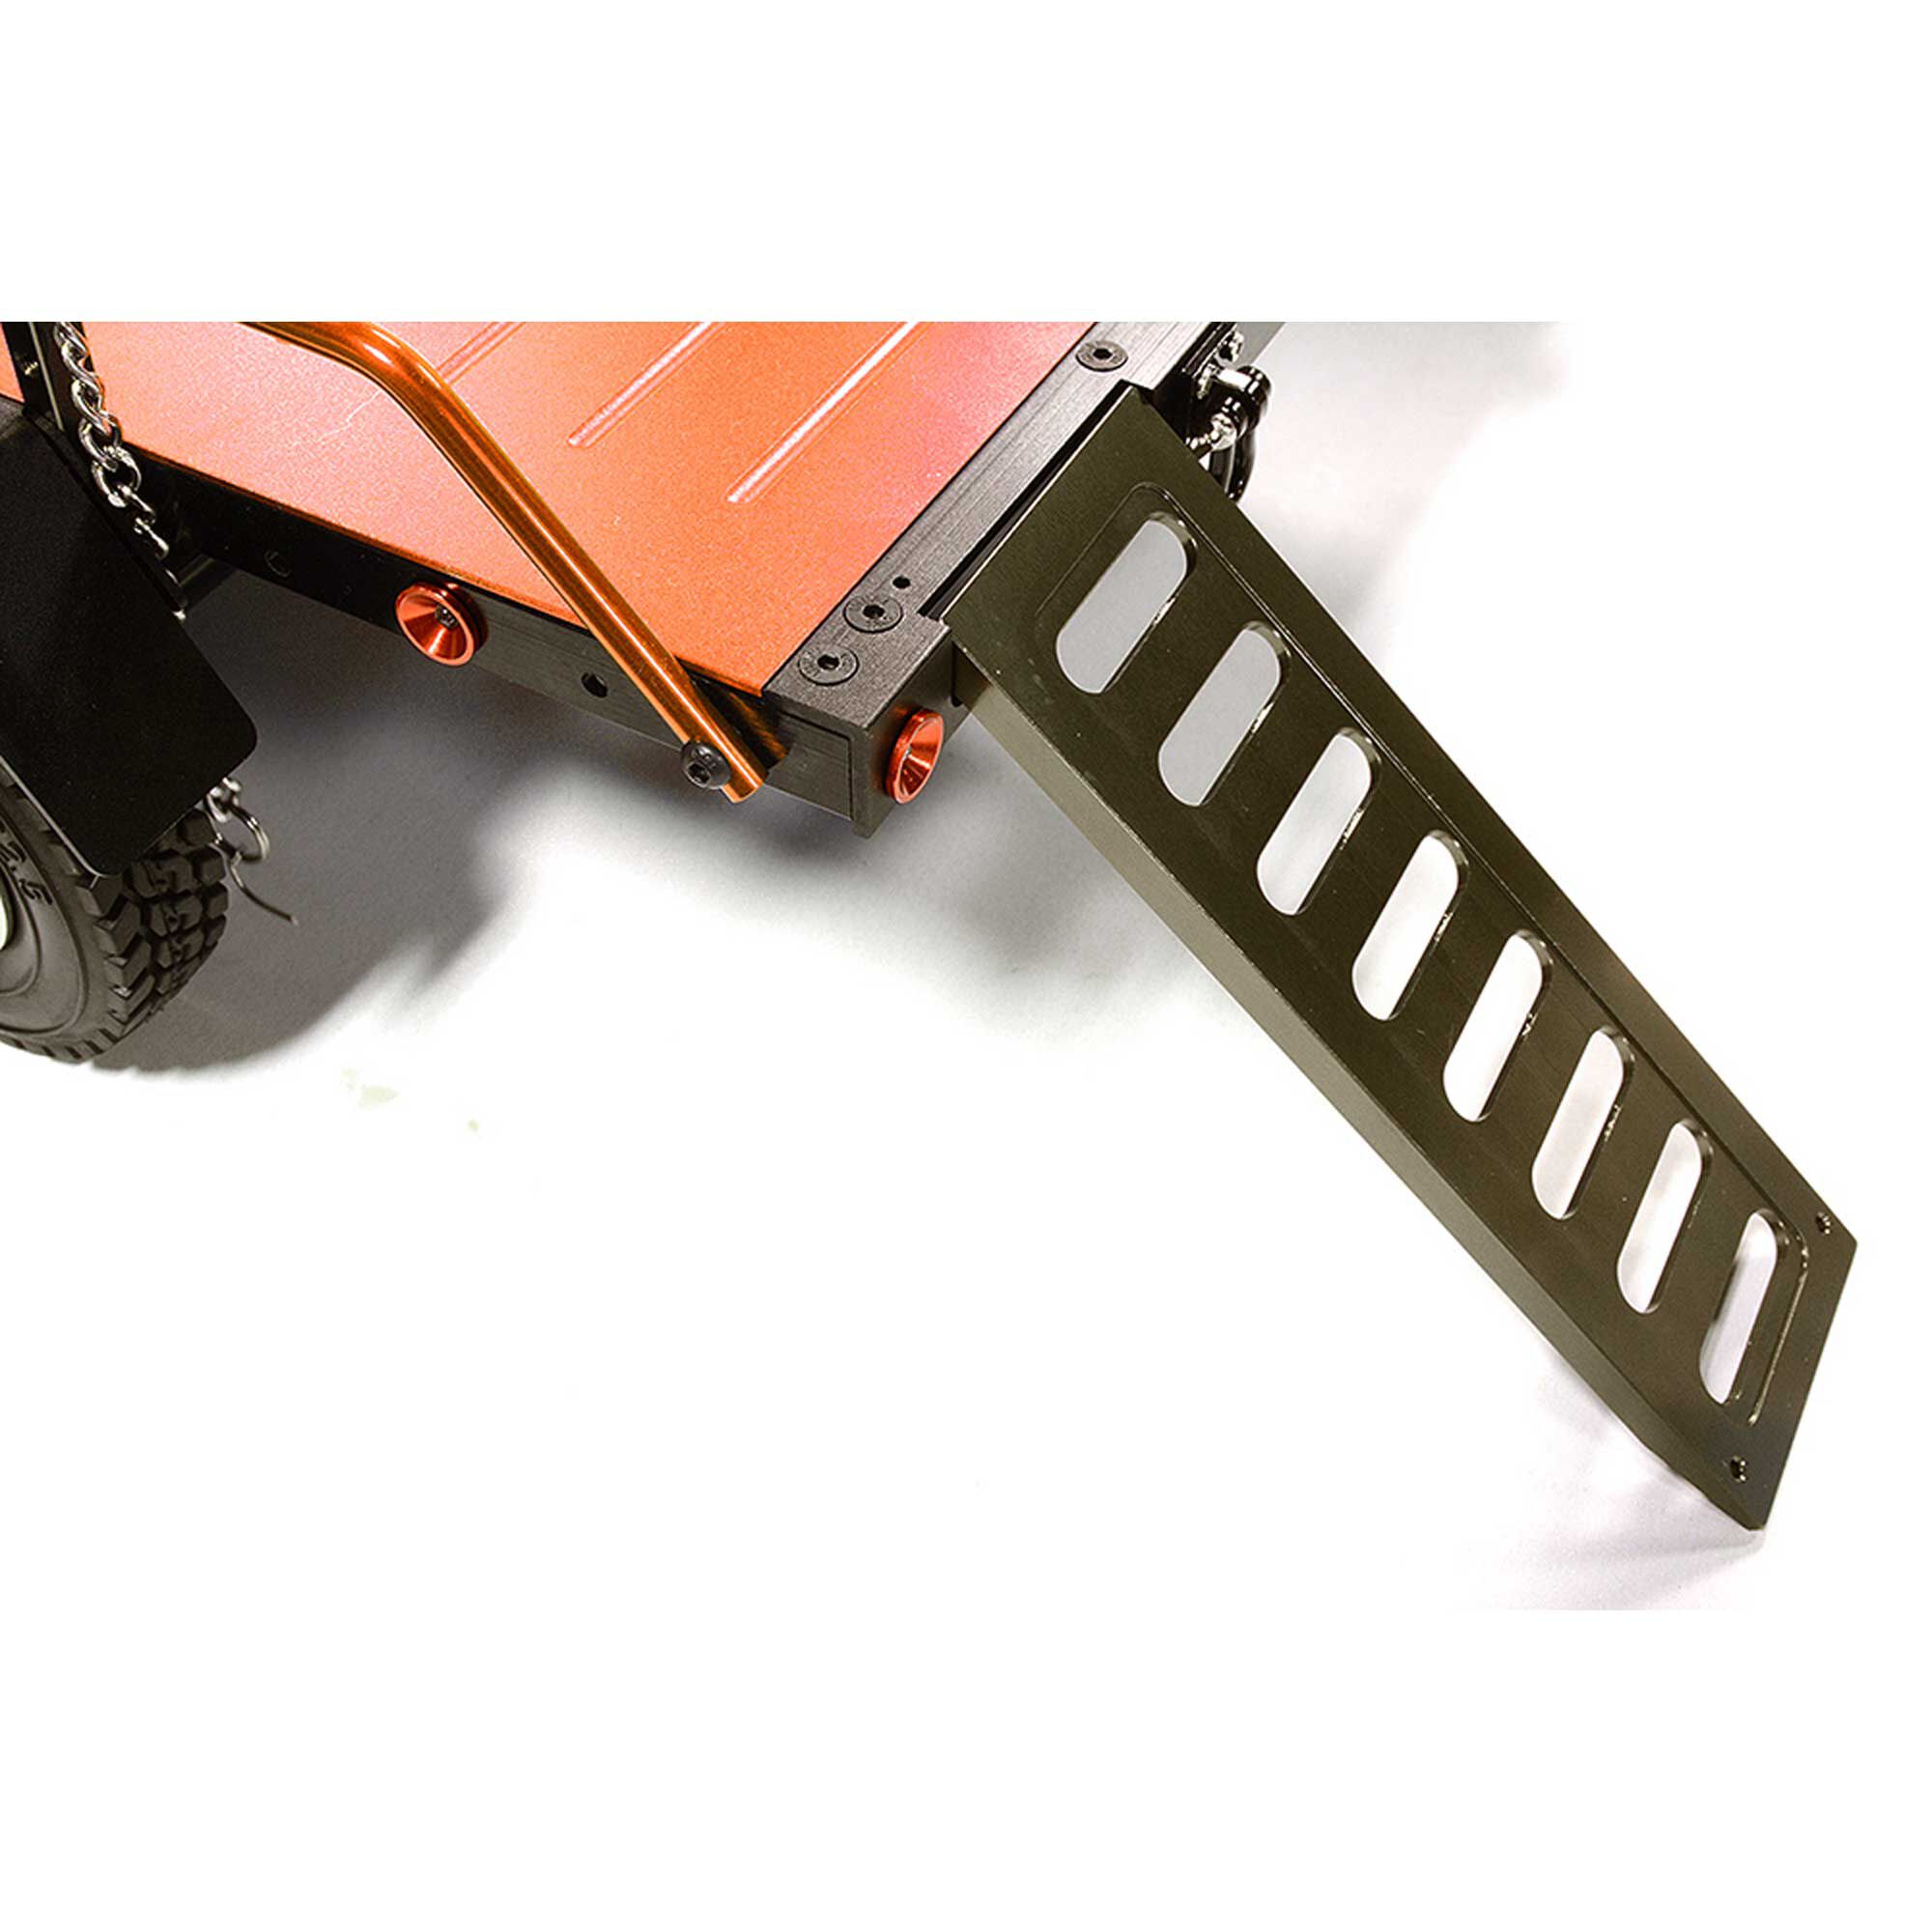 Integy Alloy Flatbed Dual Axle Car Trailer, Orange: 1/10 RC